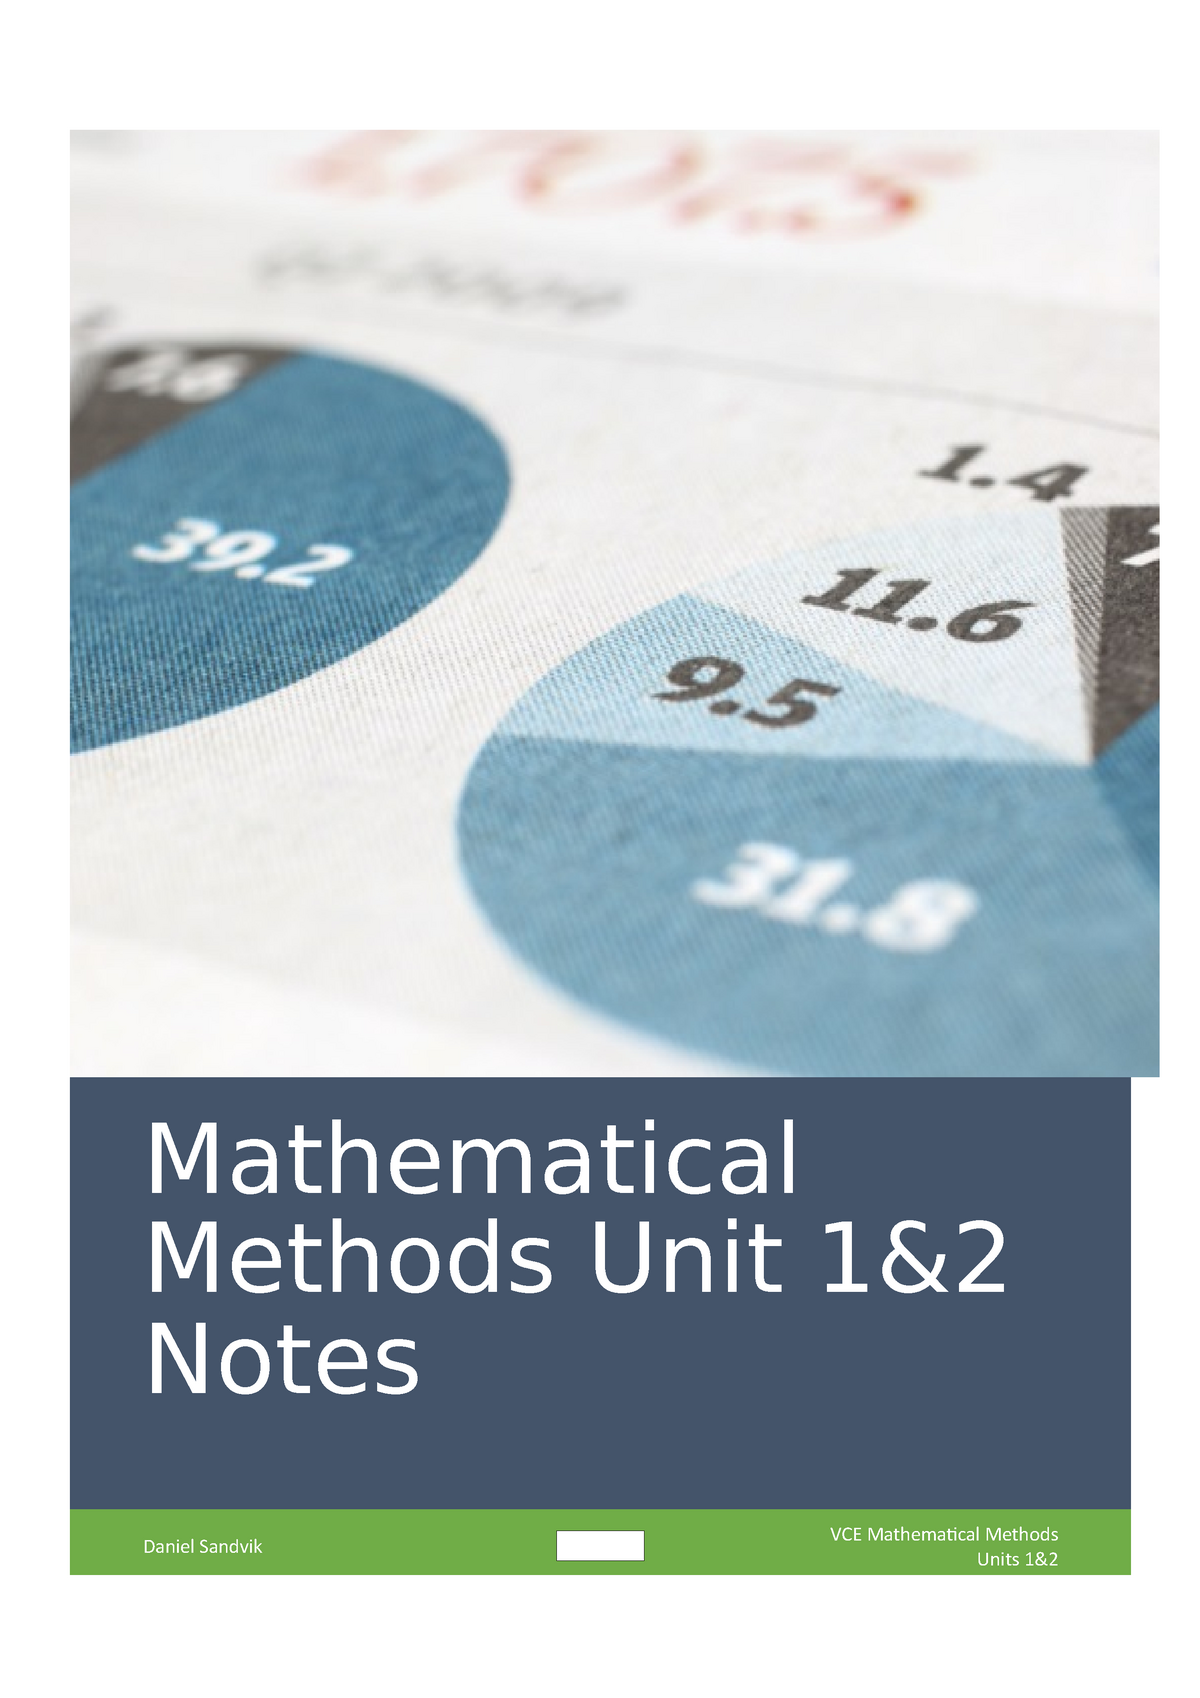 Mathematics Methods Unit 1&2 Study Notes - Mathematical Methods Unit 1